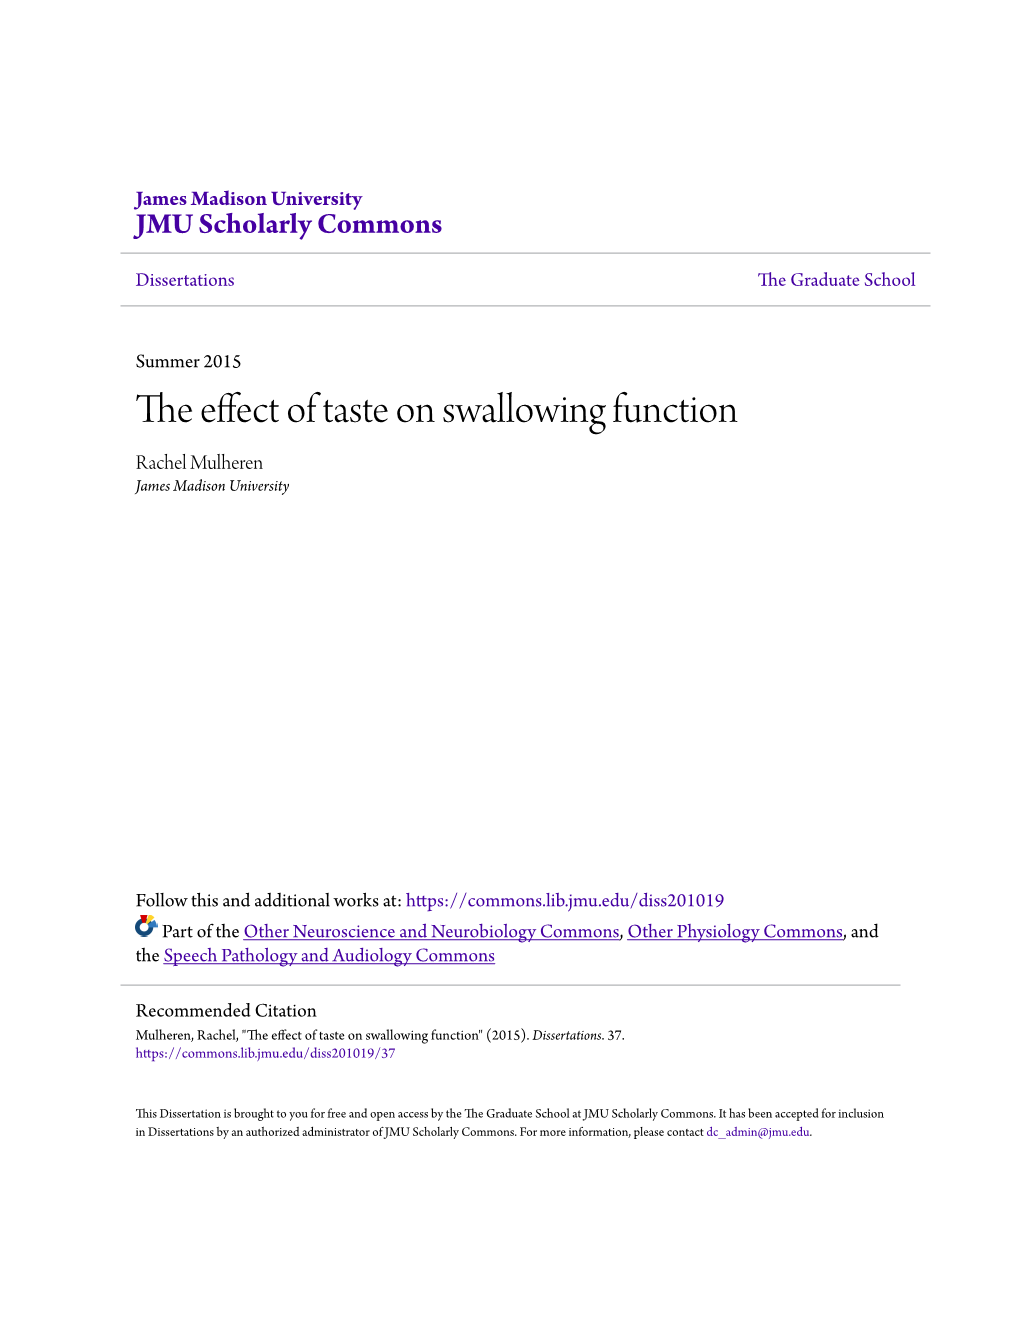 The Effect of Taste on Swallowing Function Rachel Mulheren James Madison University